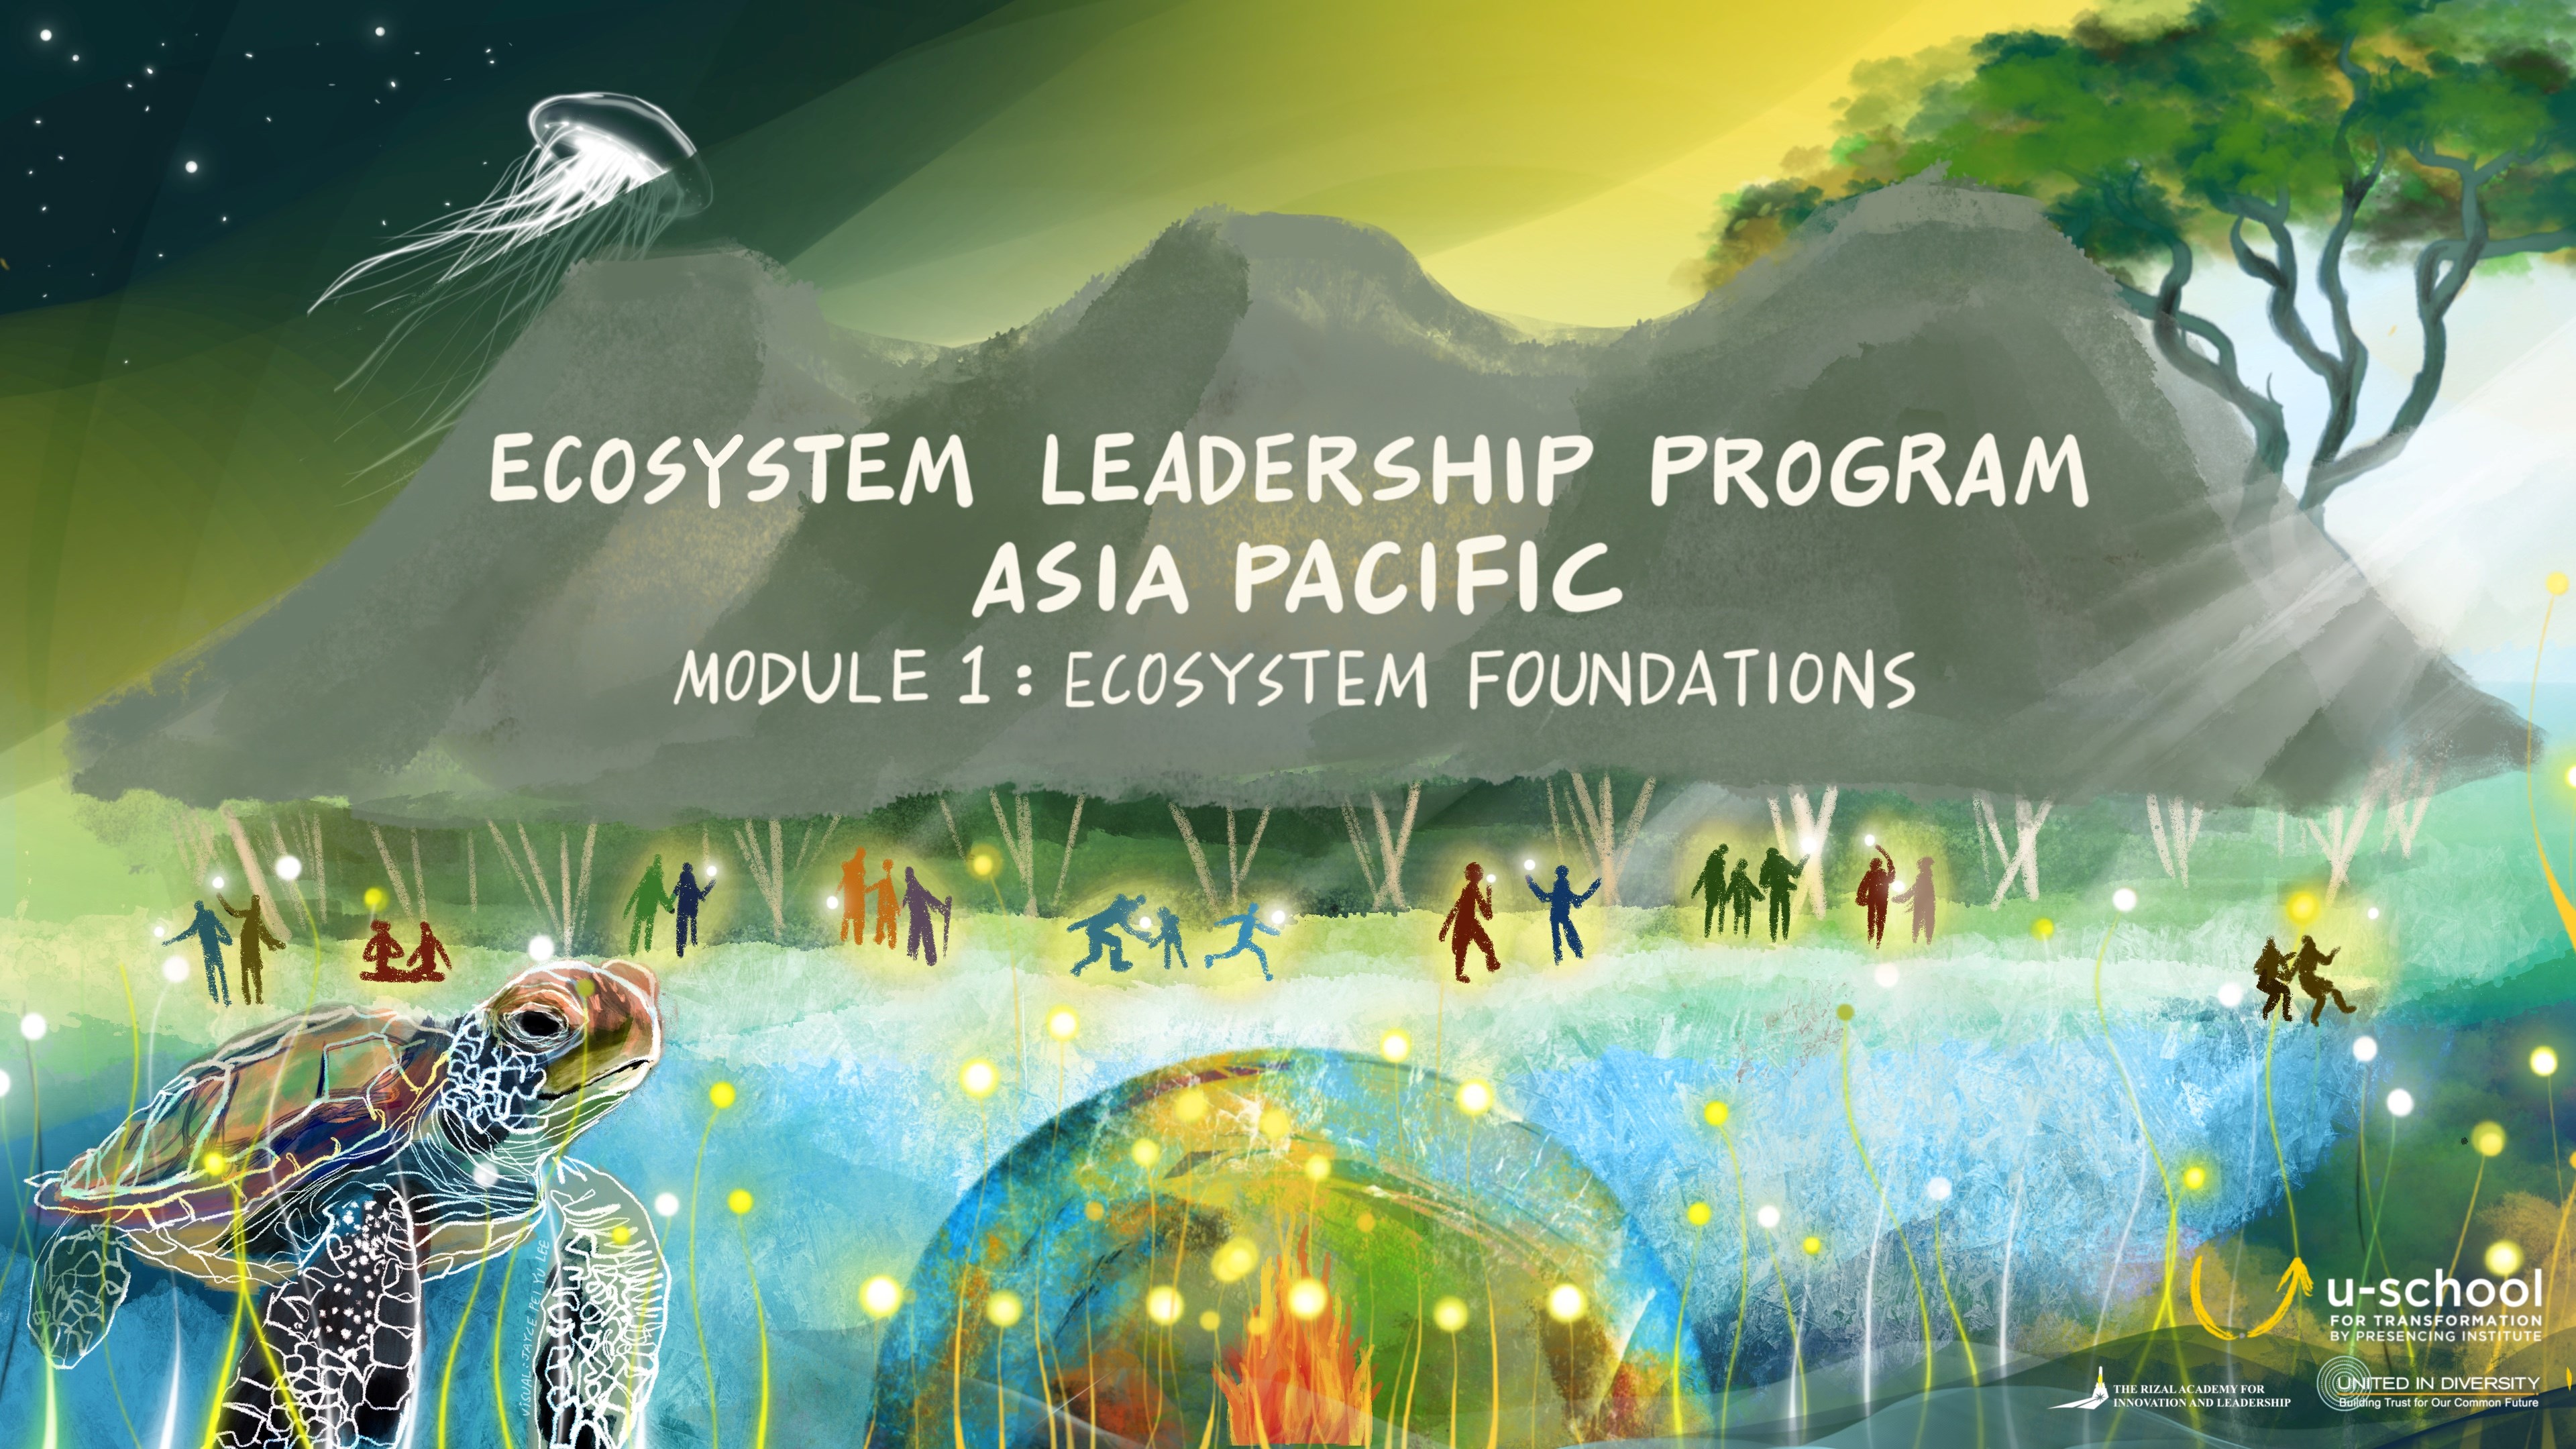 U-school Ecosystem Leadership Program (ELP) 